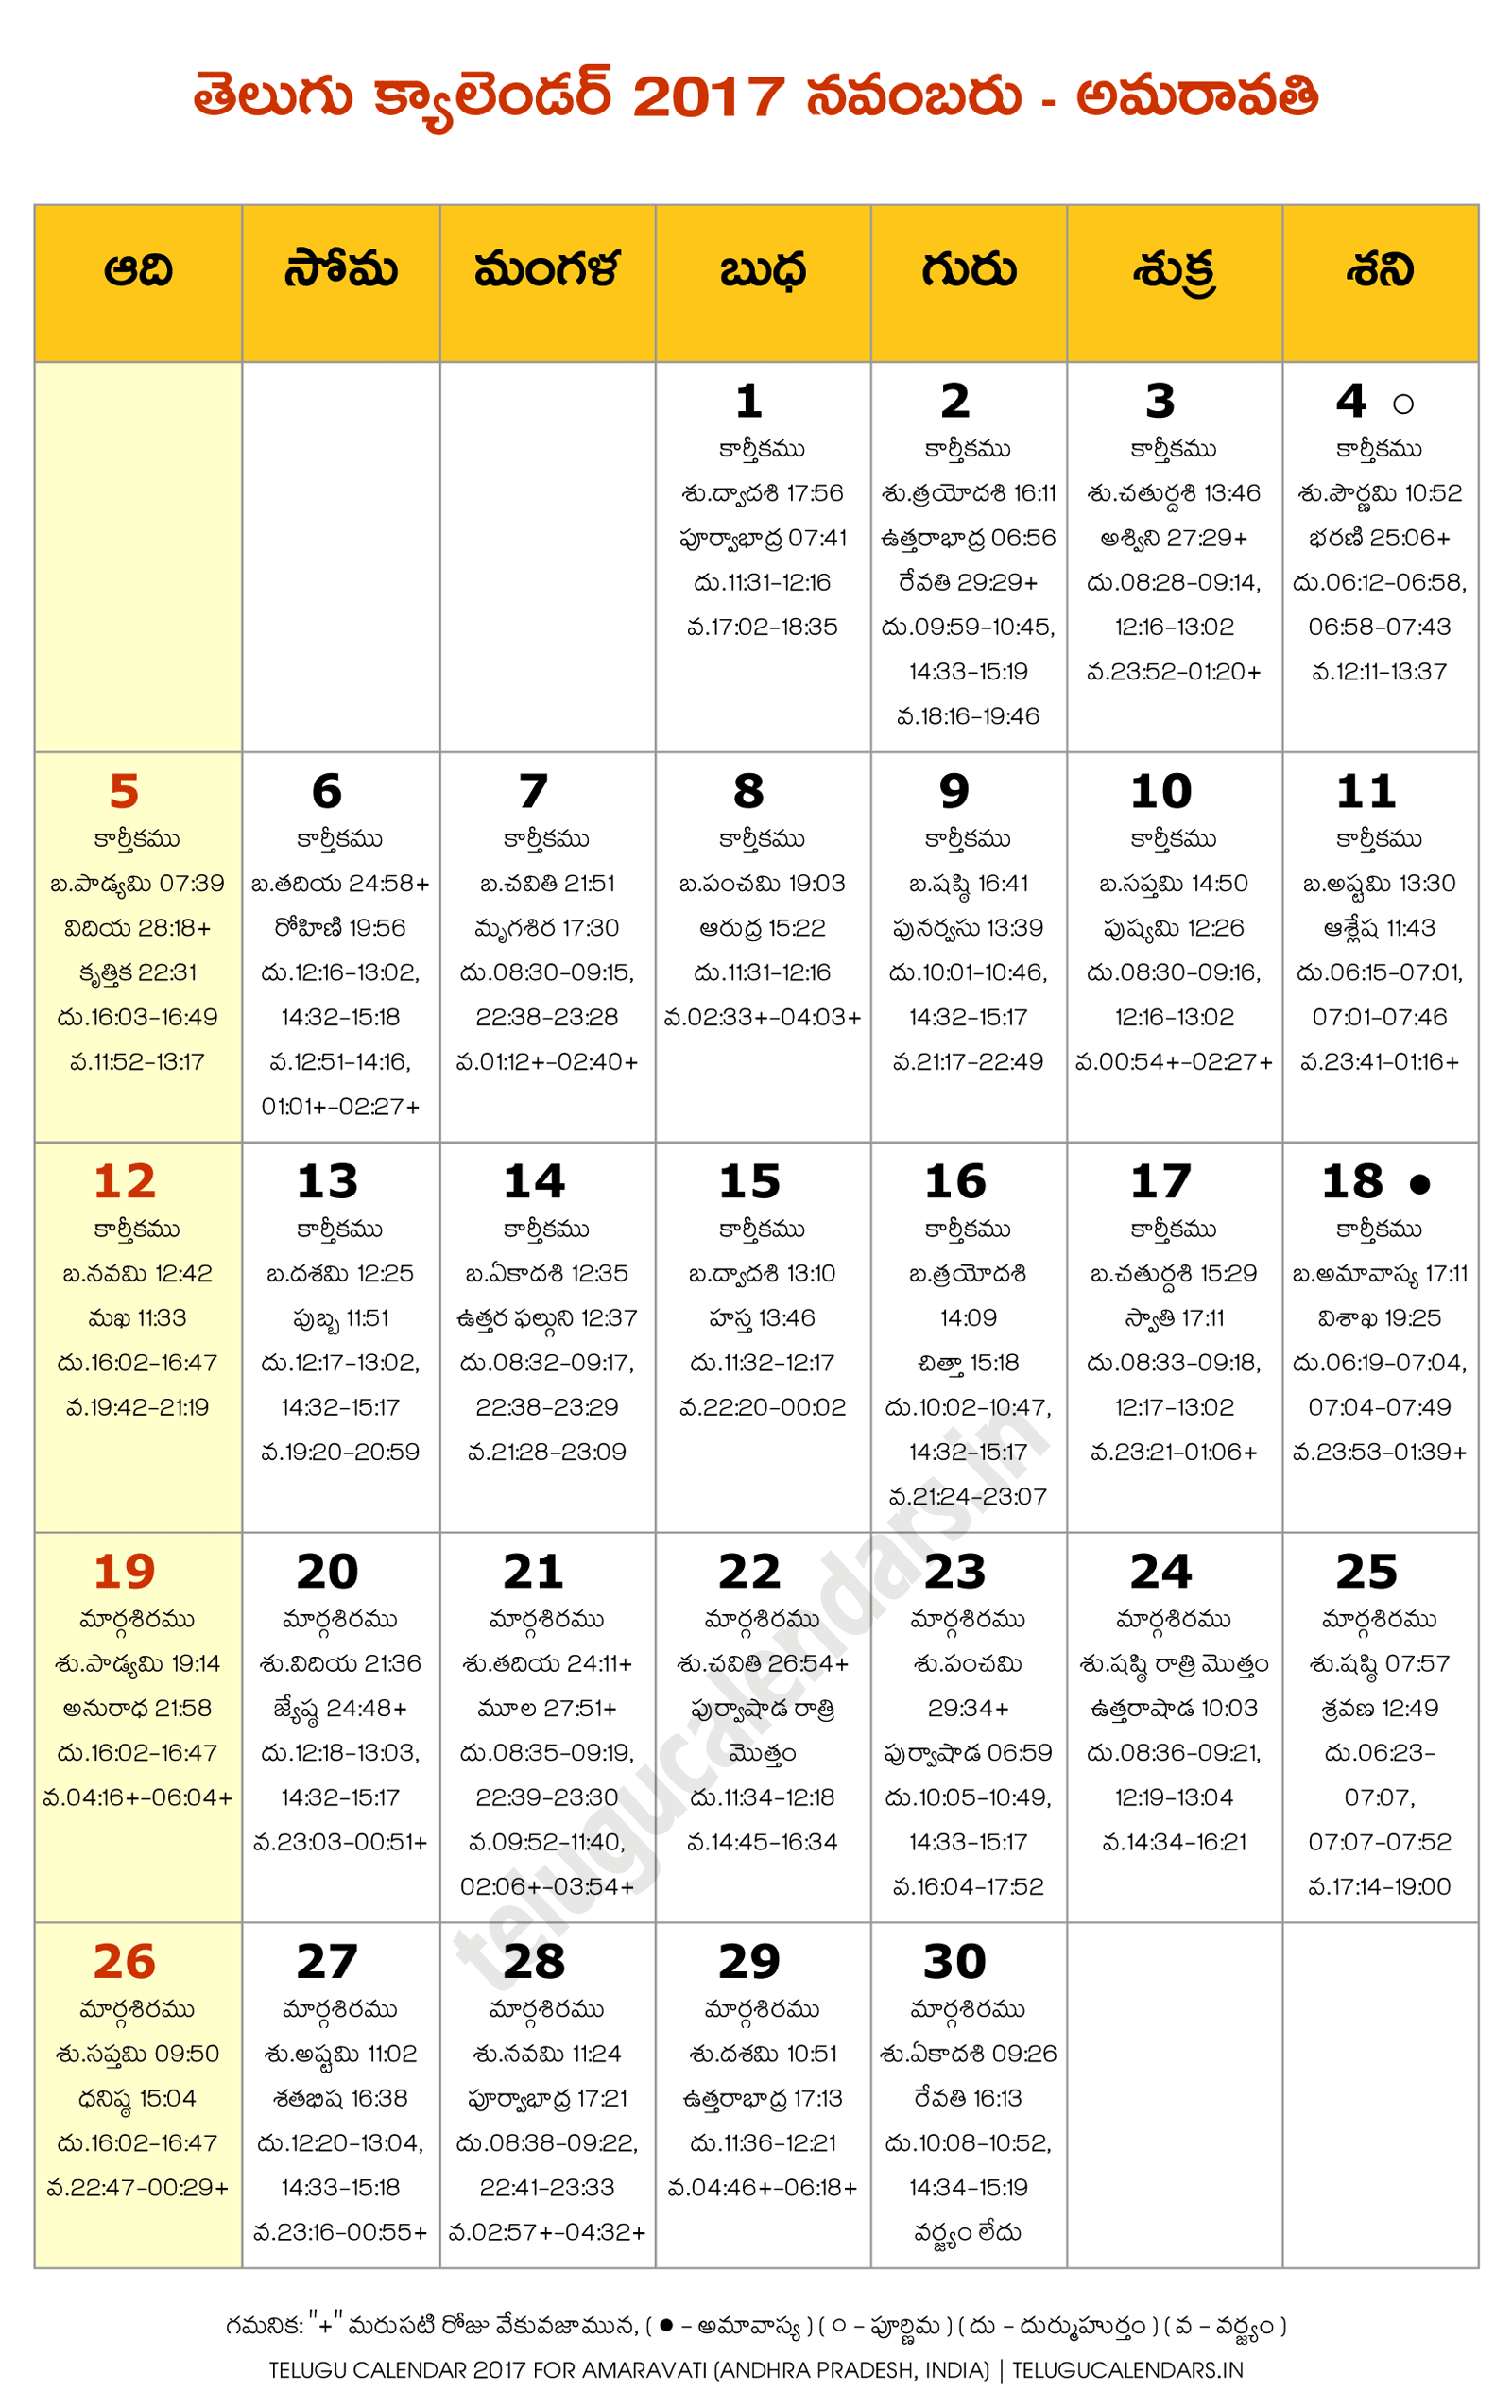 amaravati-2017-november-telugu-calendar-telugu-calendars